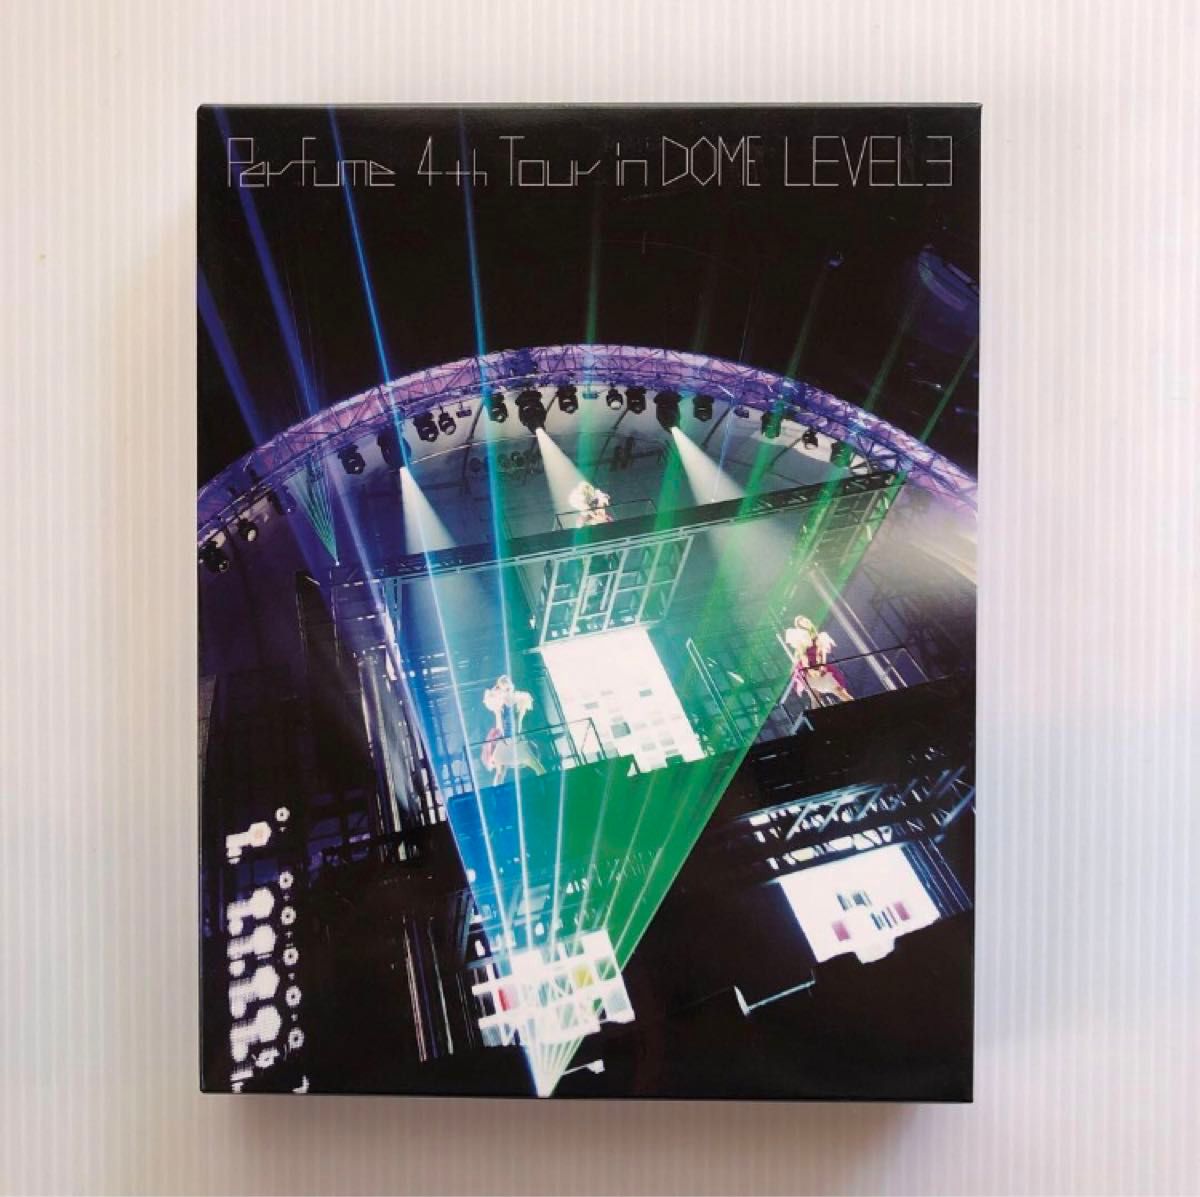 Perfume/Perfume 4th Tour in DOME LEVEL3〈初回限定盤・2枚組〉Blu-ray Disc